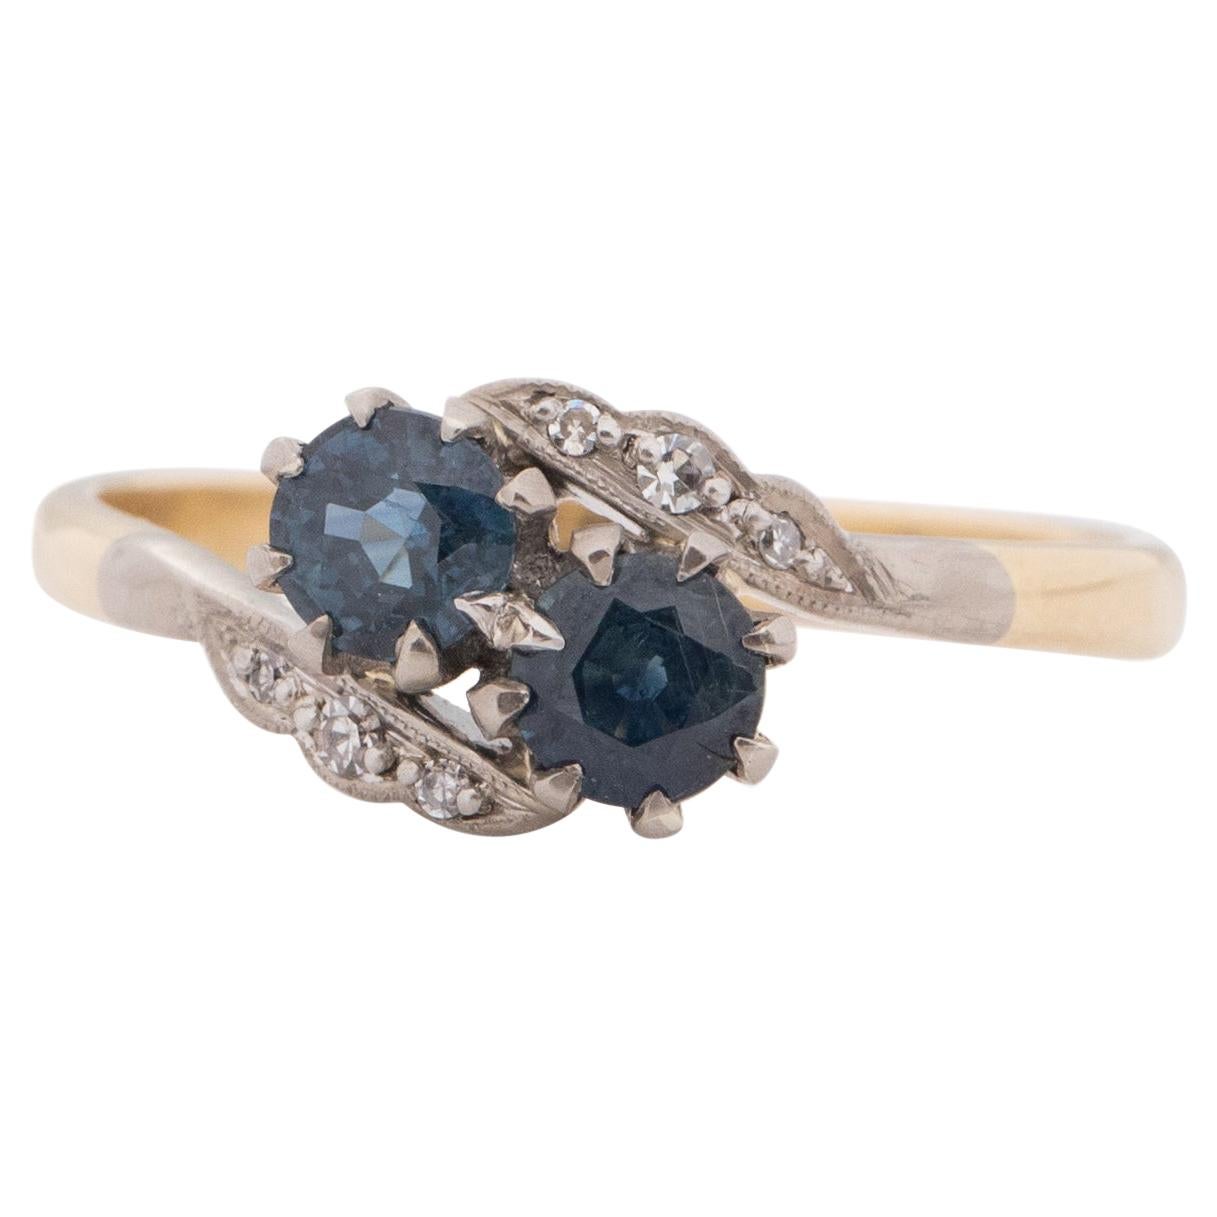 Circa 1920's Art Deco 18K Two Tone Vintage Bypass Sapphire Fashion Ring